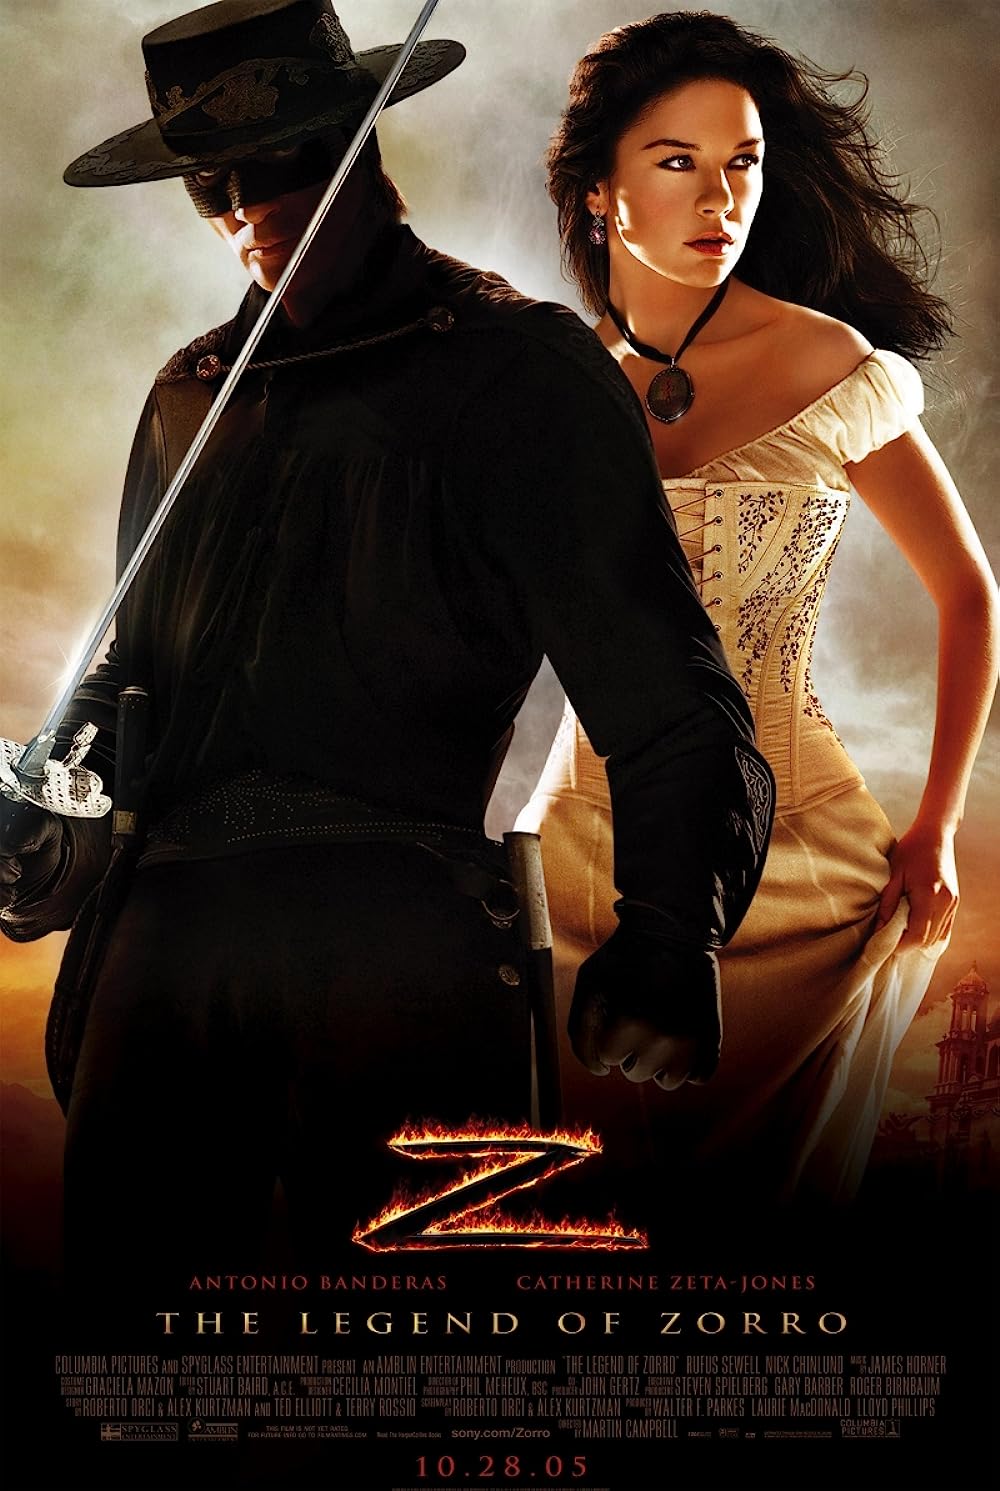 FULL MOVIE: The Legend Of Zorro (2005) [Action]